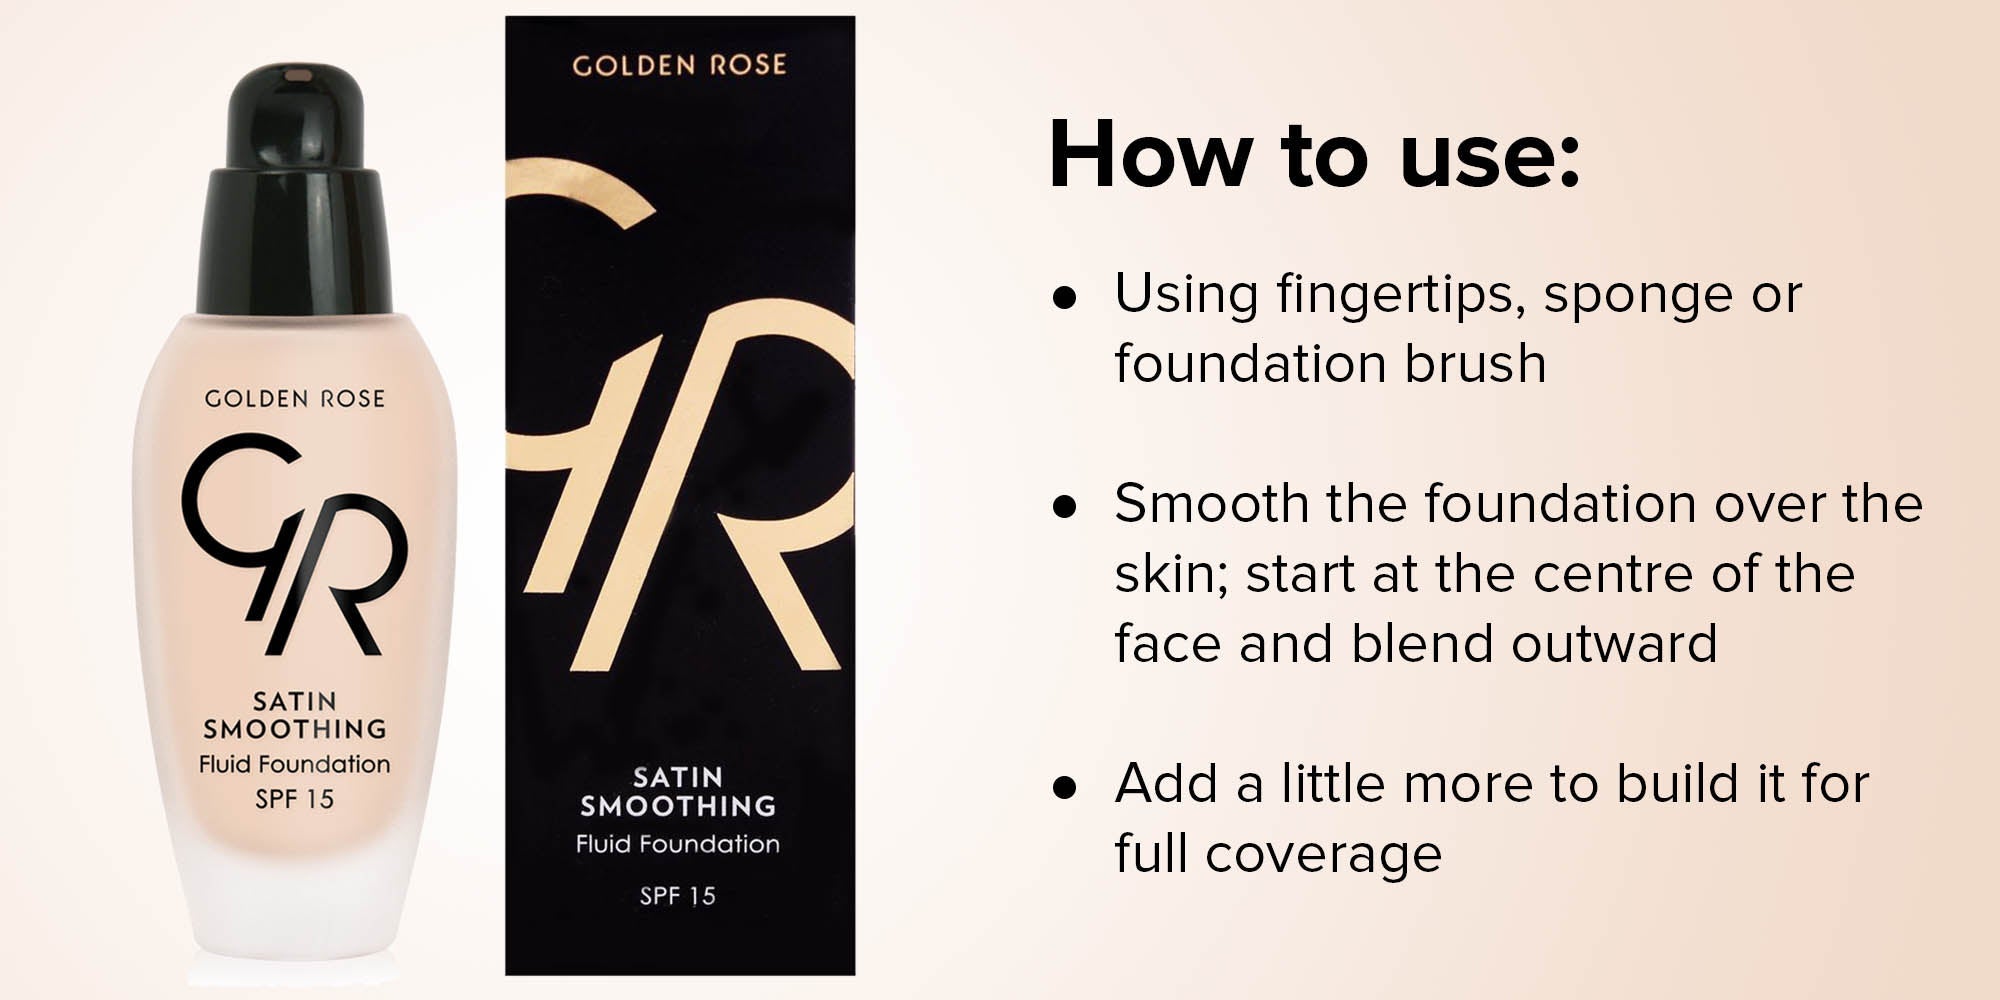 Golden rose Satin smoothing fluid foundation